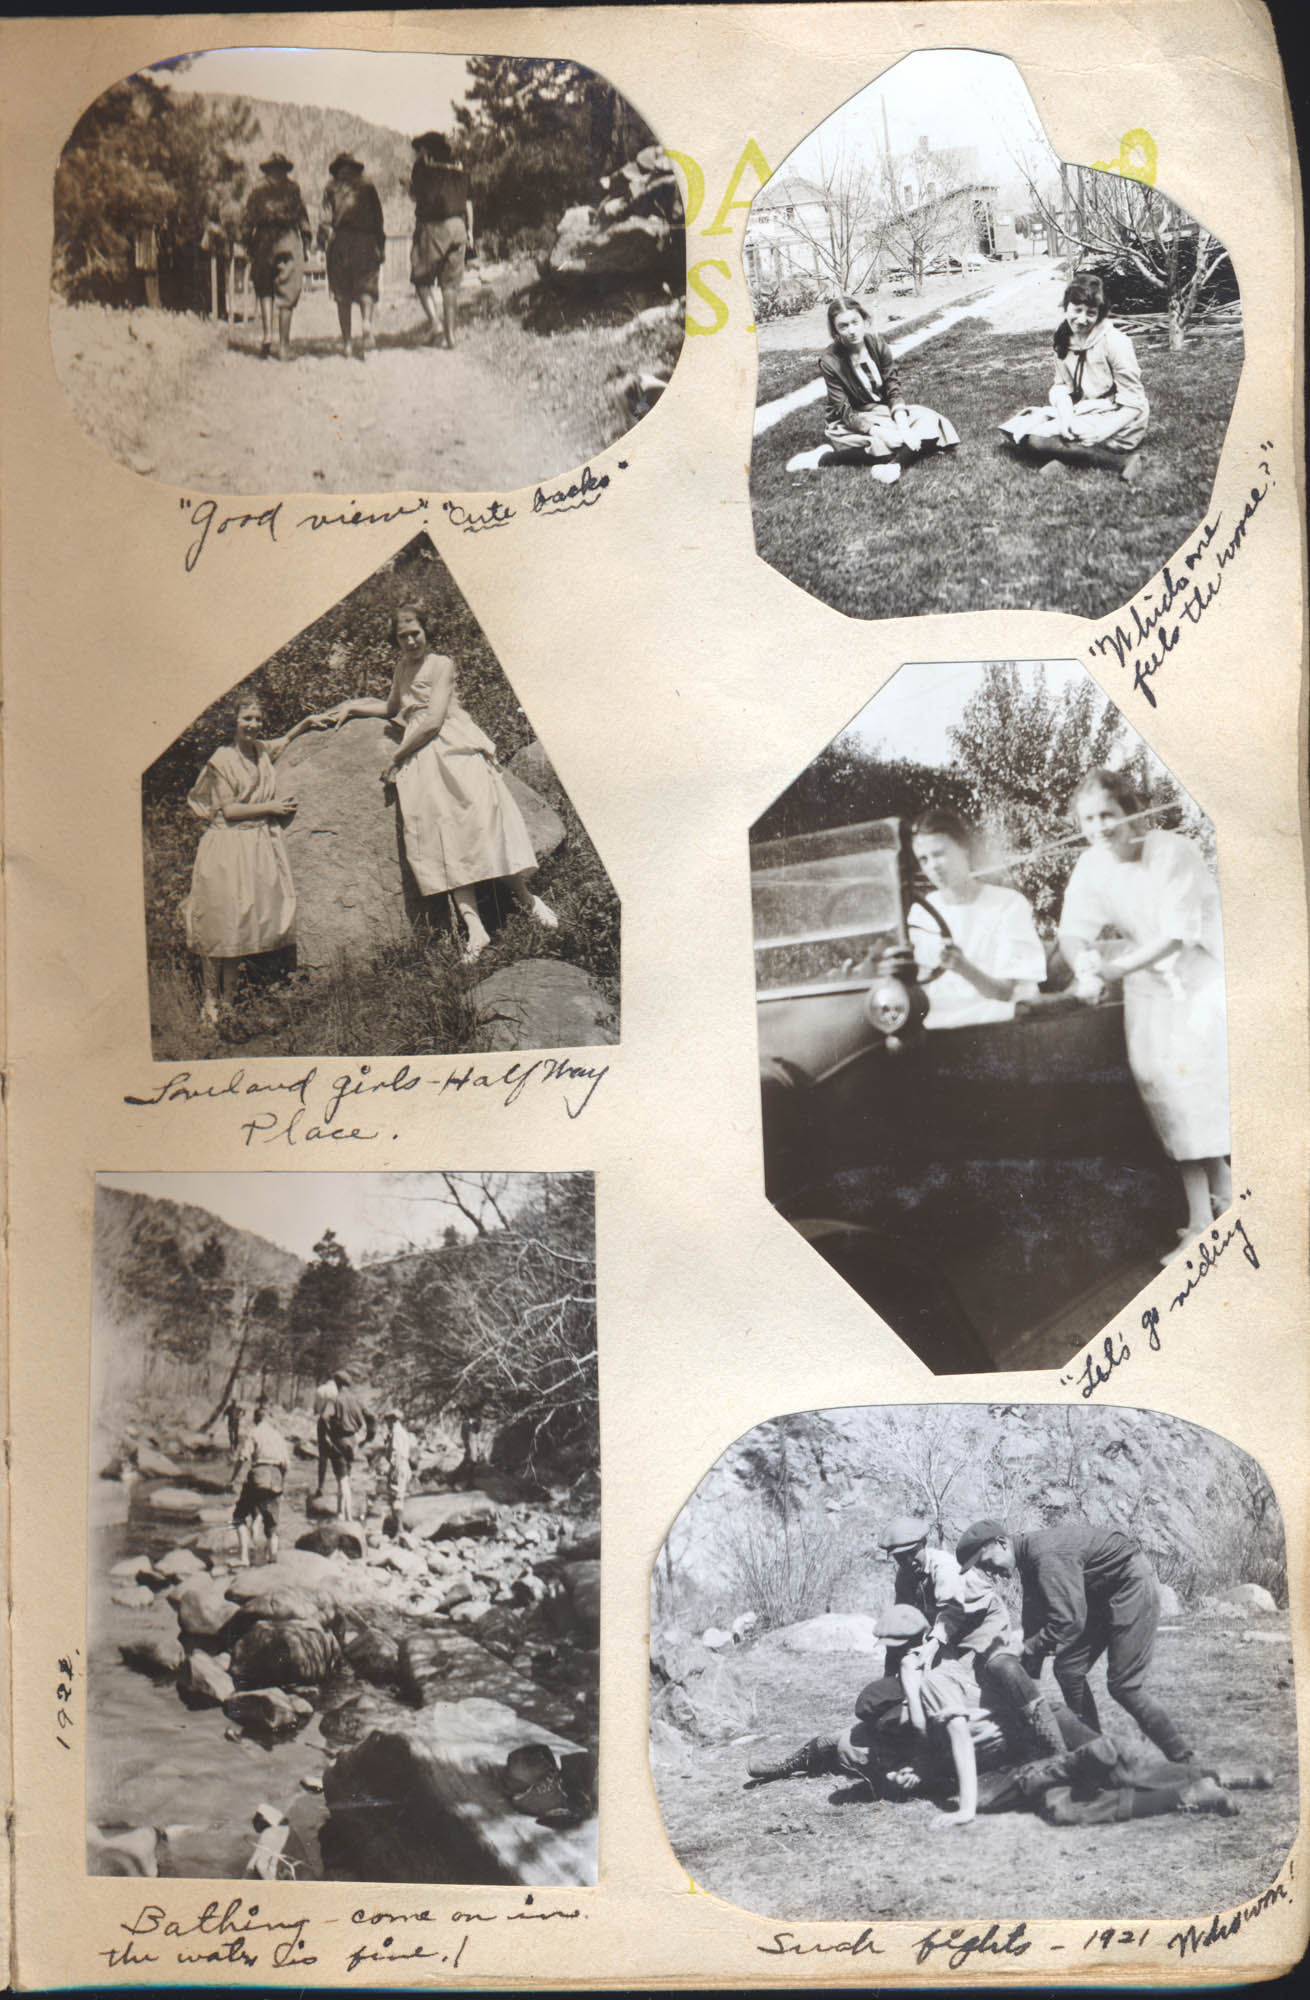 Idlewild Lodge - idlewildlodge.github.io - Circa 1921-1924 - Elizabeth Dauth's Memory Book - Page 149 - Idlewi